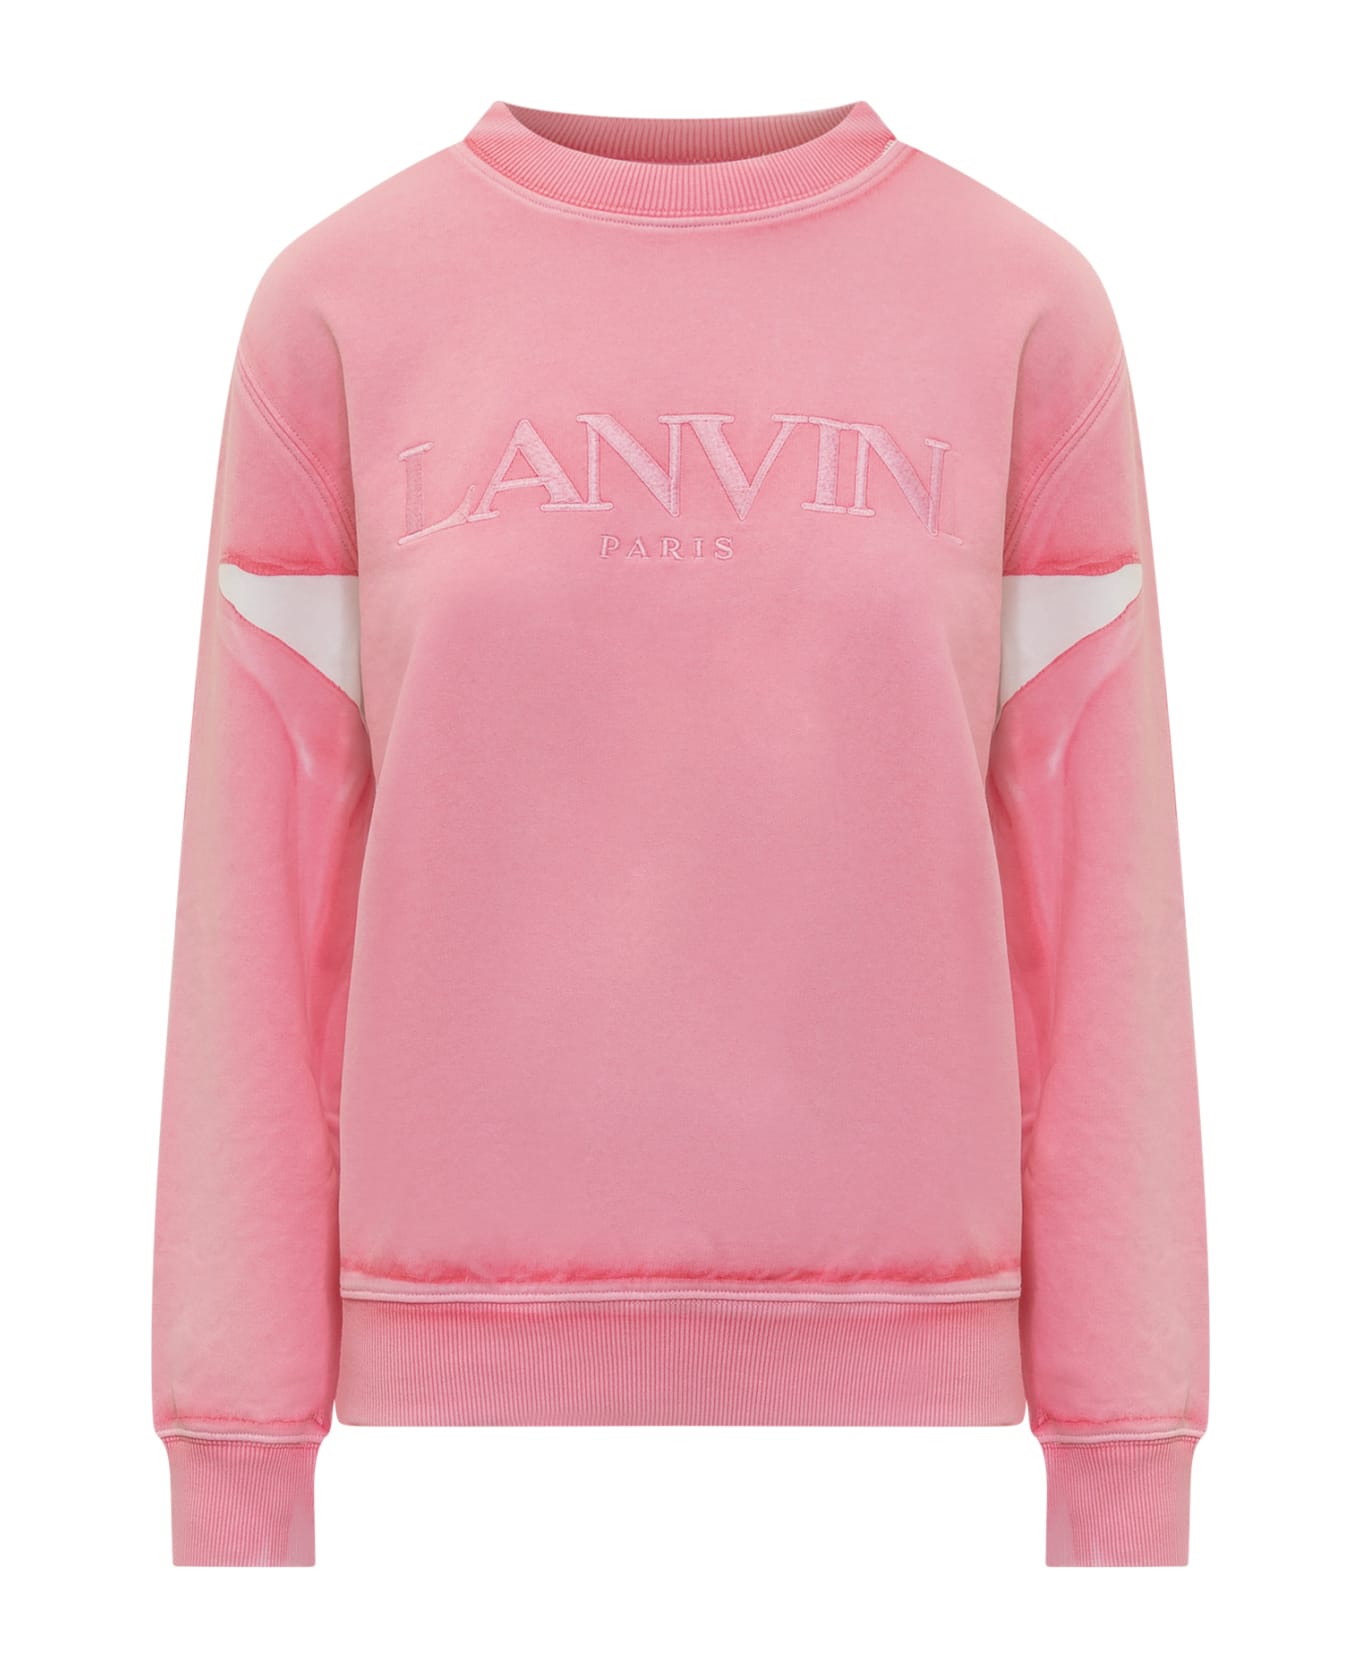 Lanvin Overprinted Sweatshirt - Peony